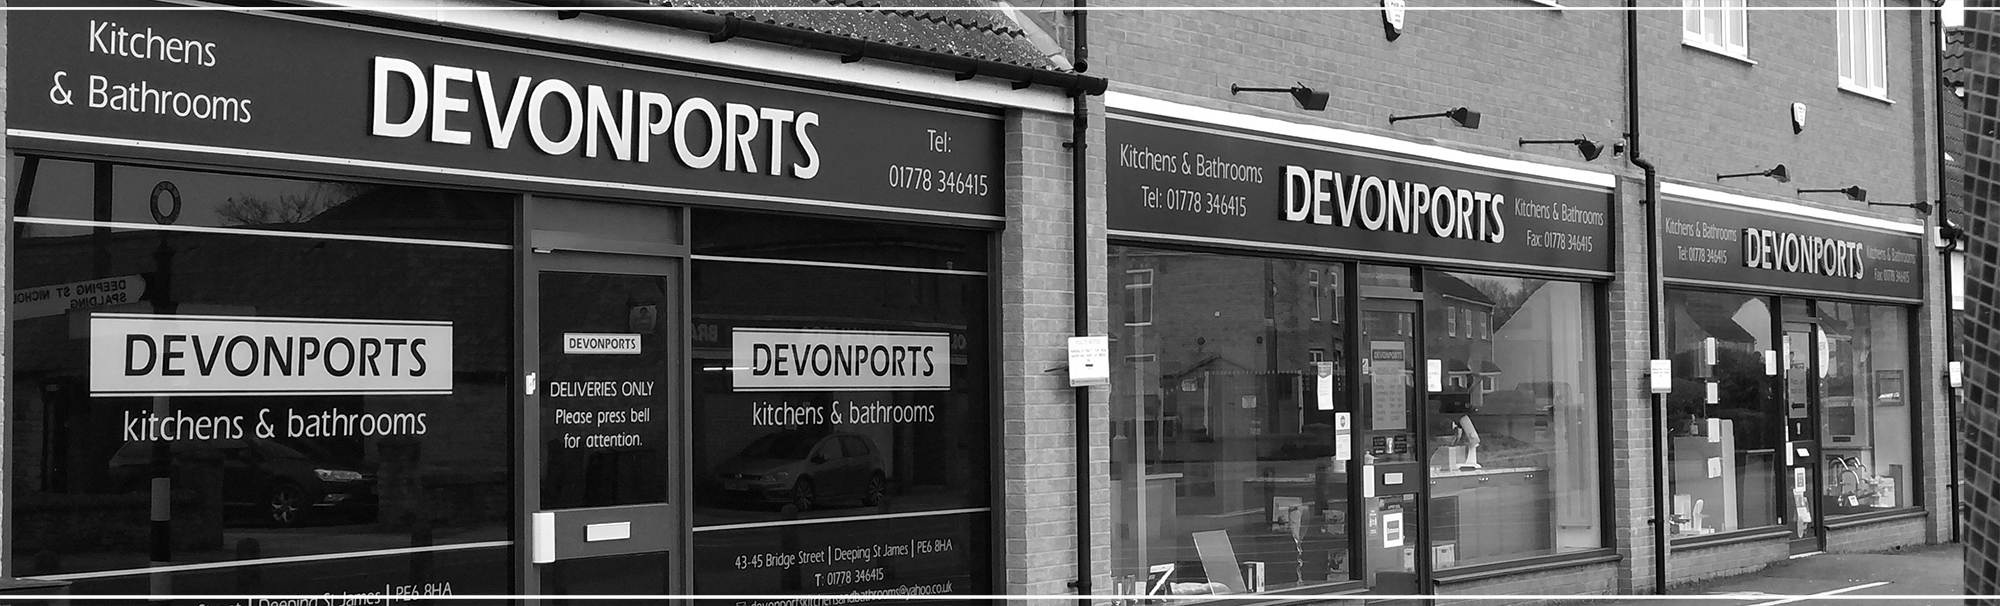 Devonports Kitchens and Bathrooms